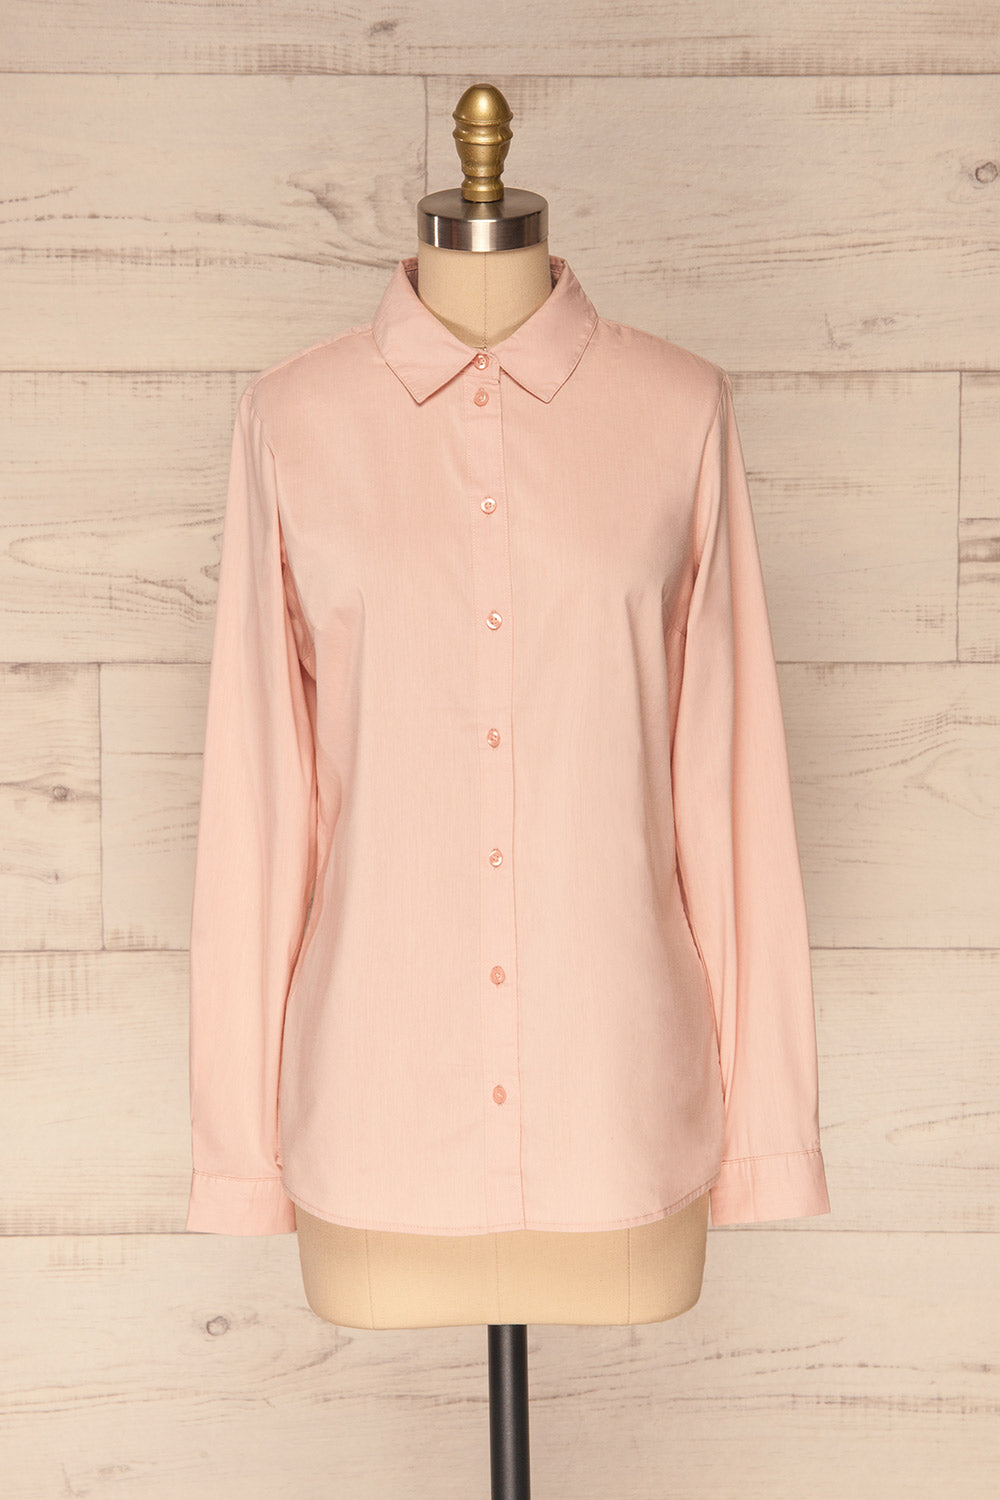 Eggodden Rose Light Pink Long Sleeved Shirt | La Petite Garçonne front view 